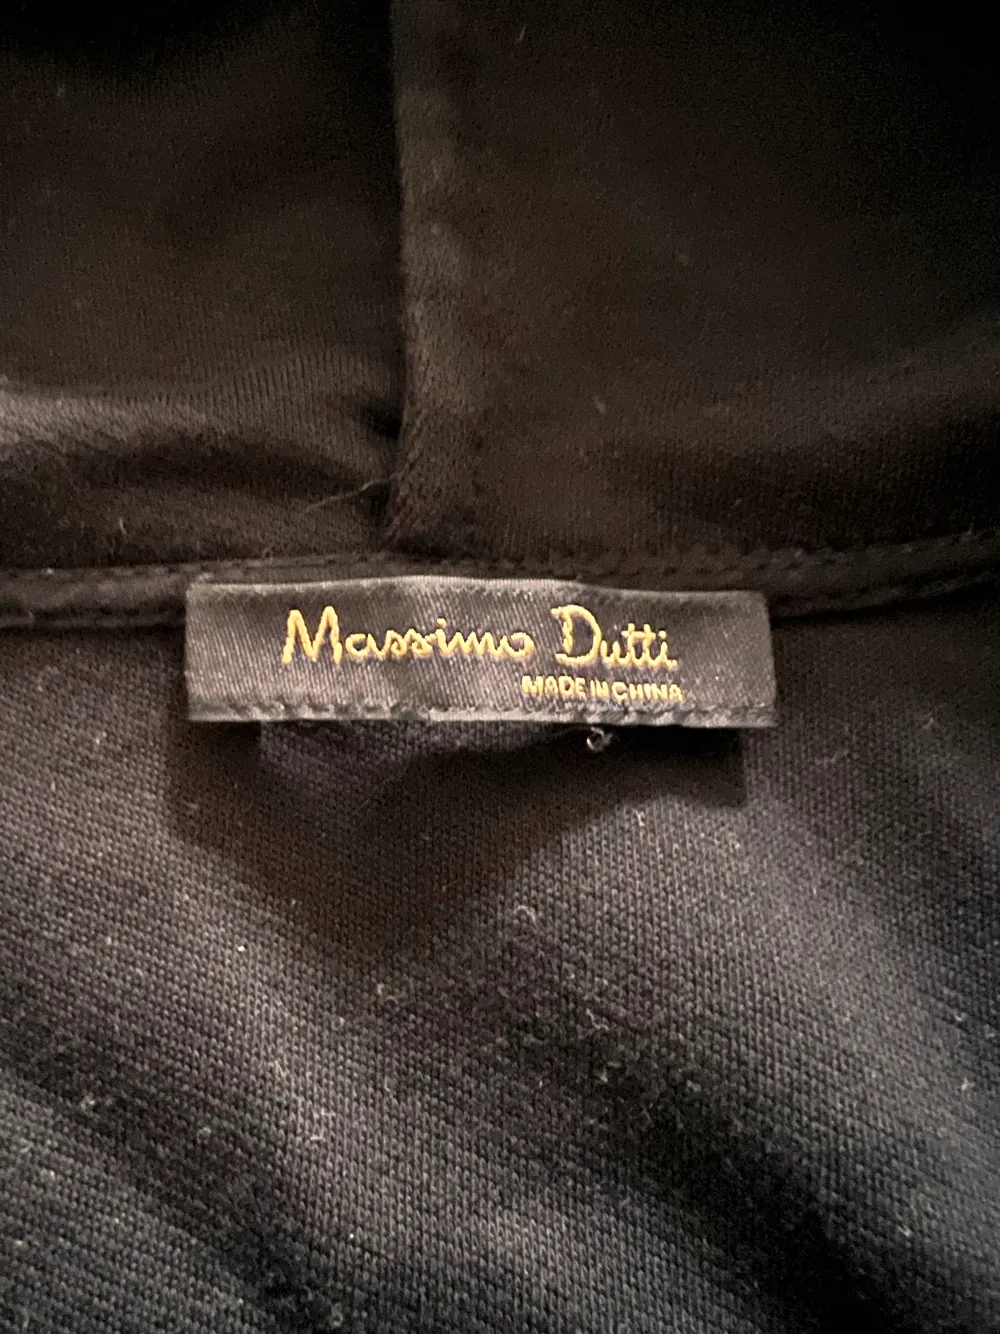 Fin Massimo Dutti tröja. Hoodies.